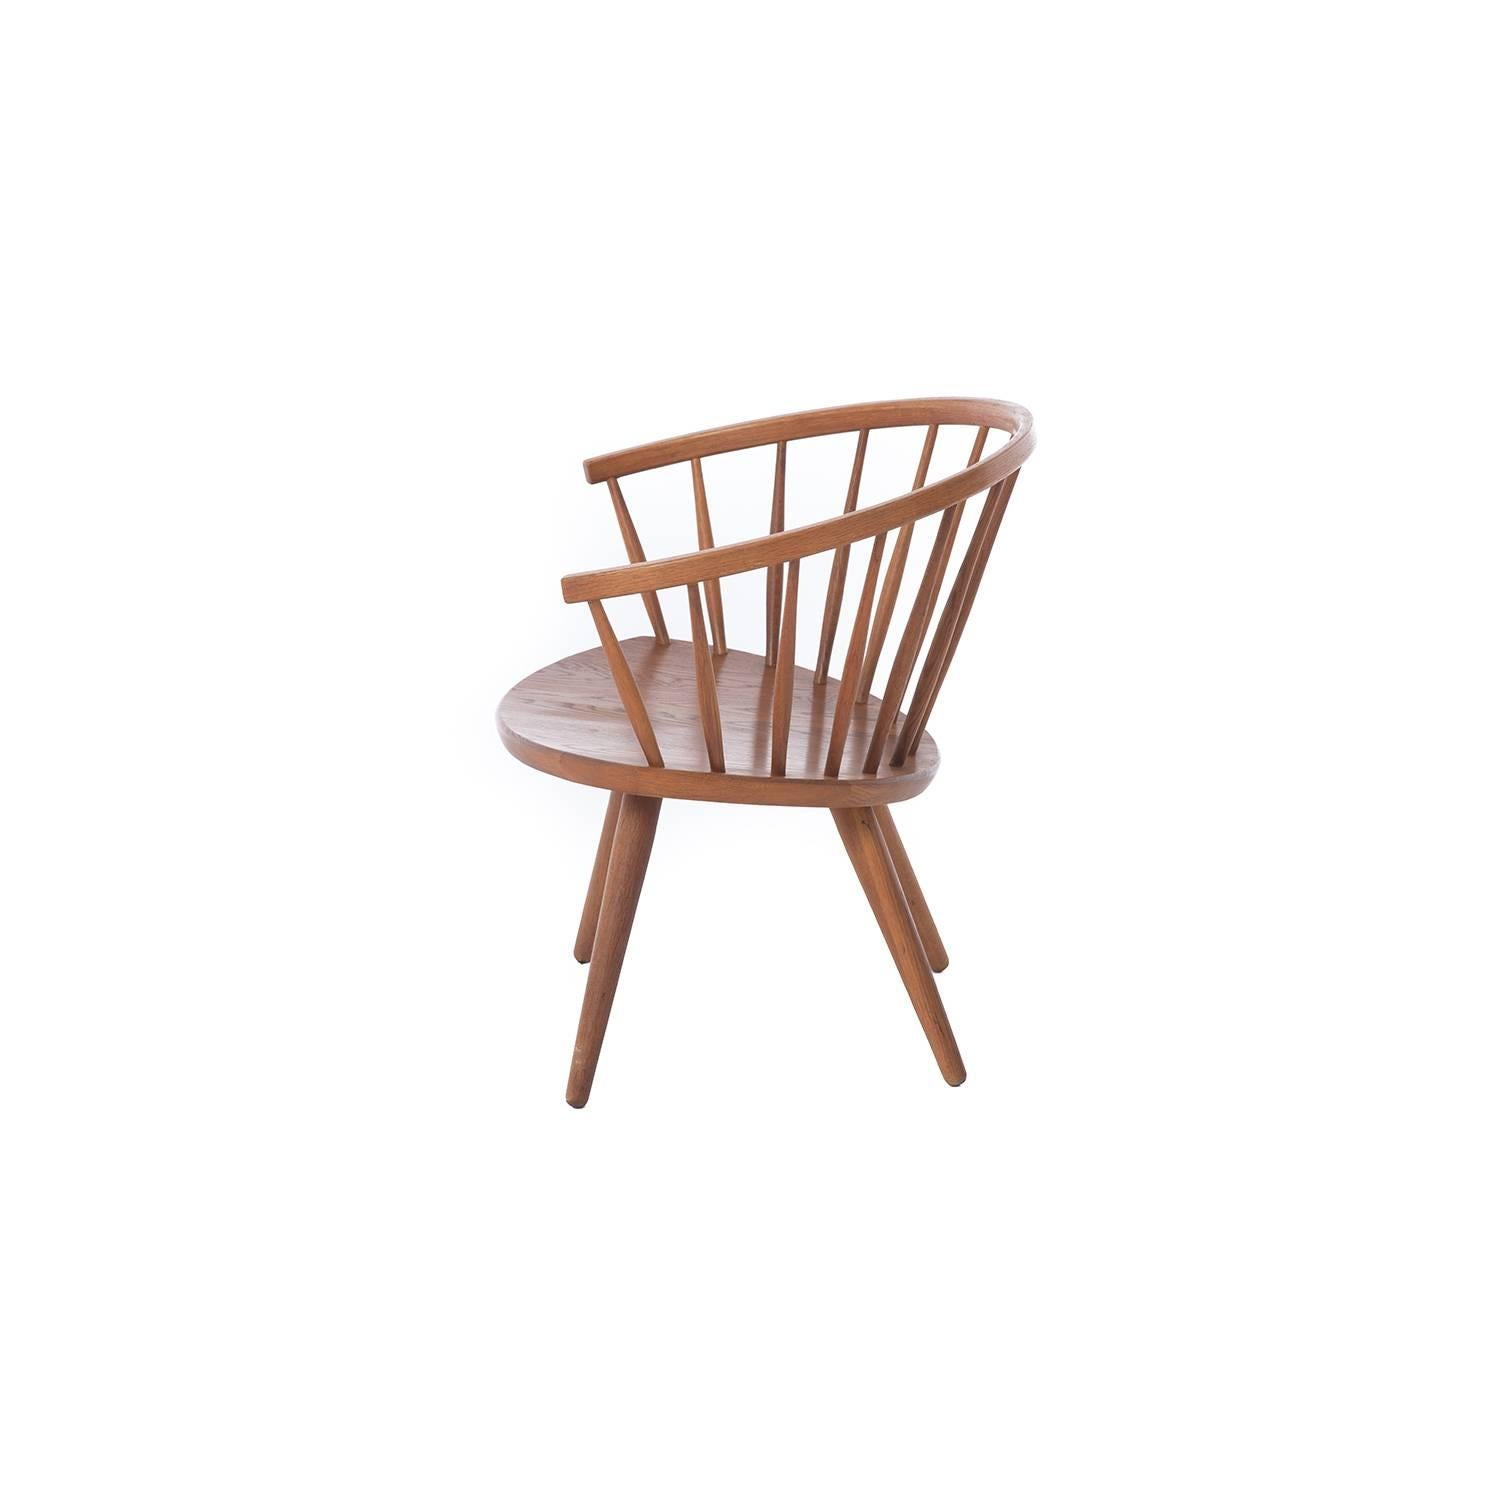 Swedish Scandinavian Modern Spindle-Back Chair